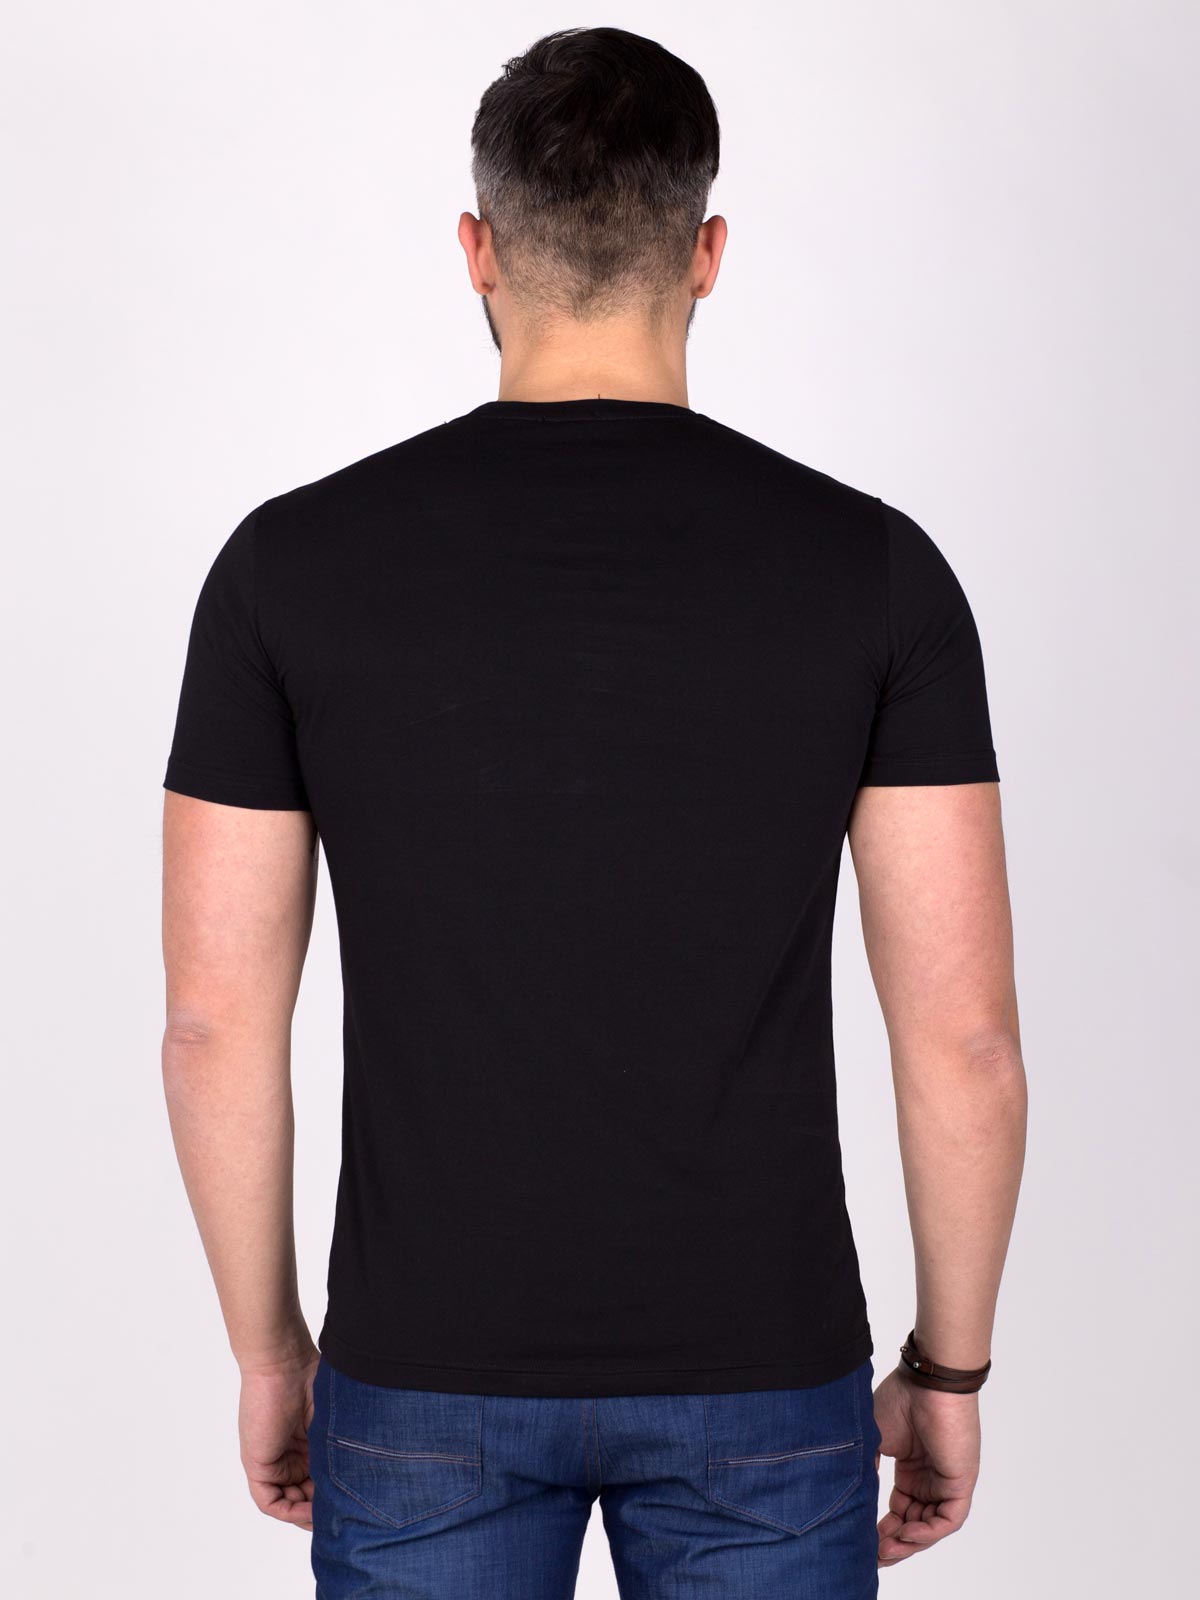 Tshirt in black with cyclamen print - 96345 € 6.75 img3